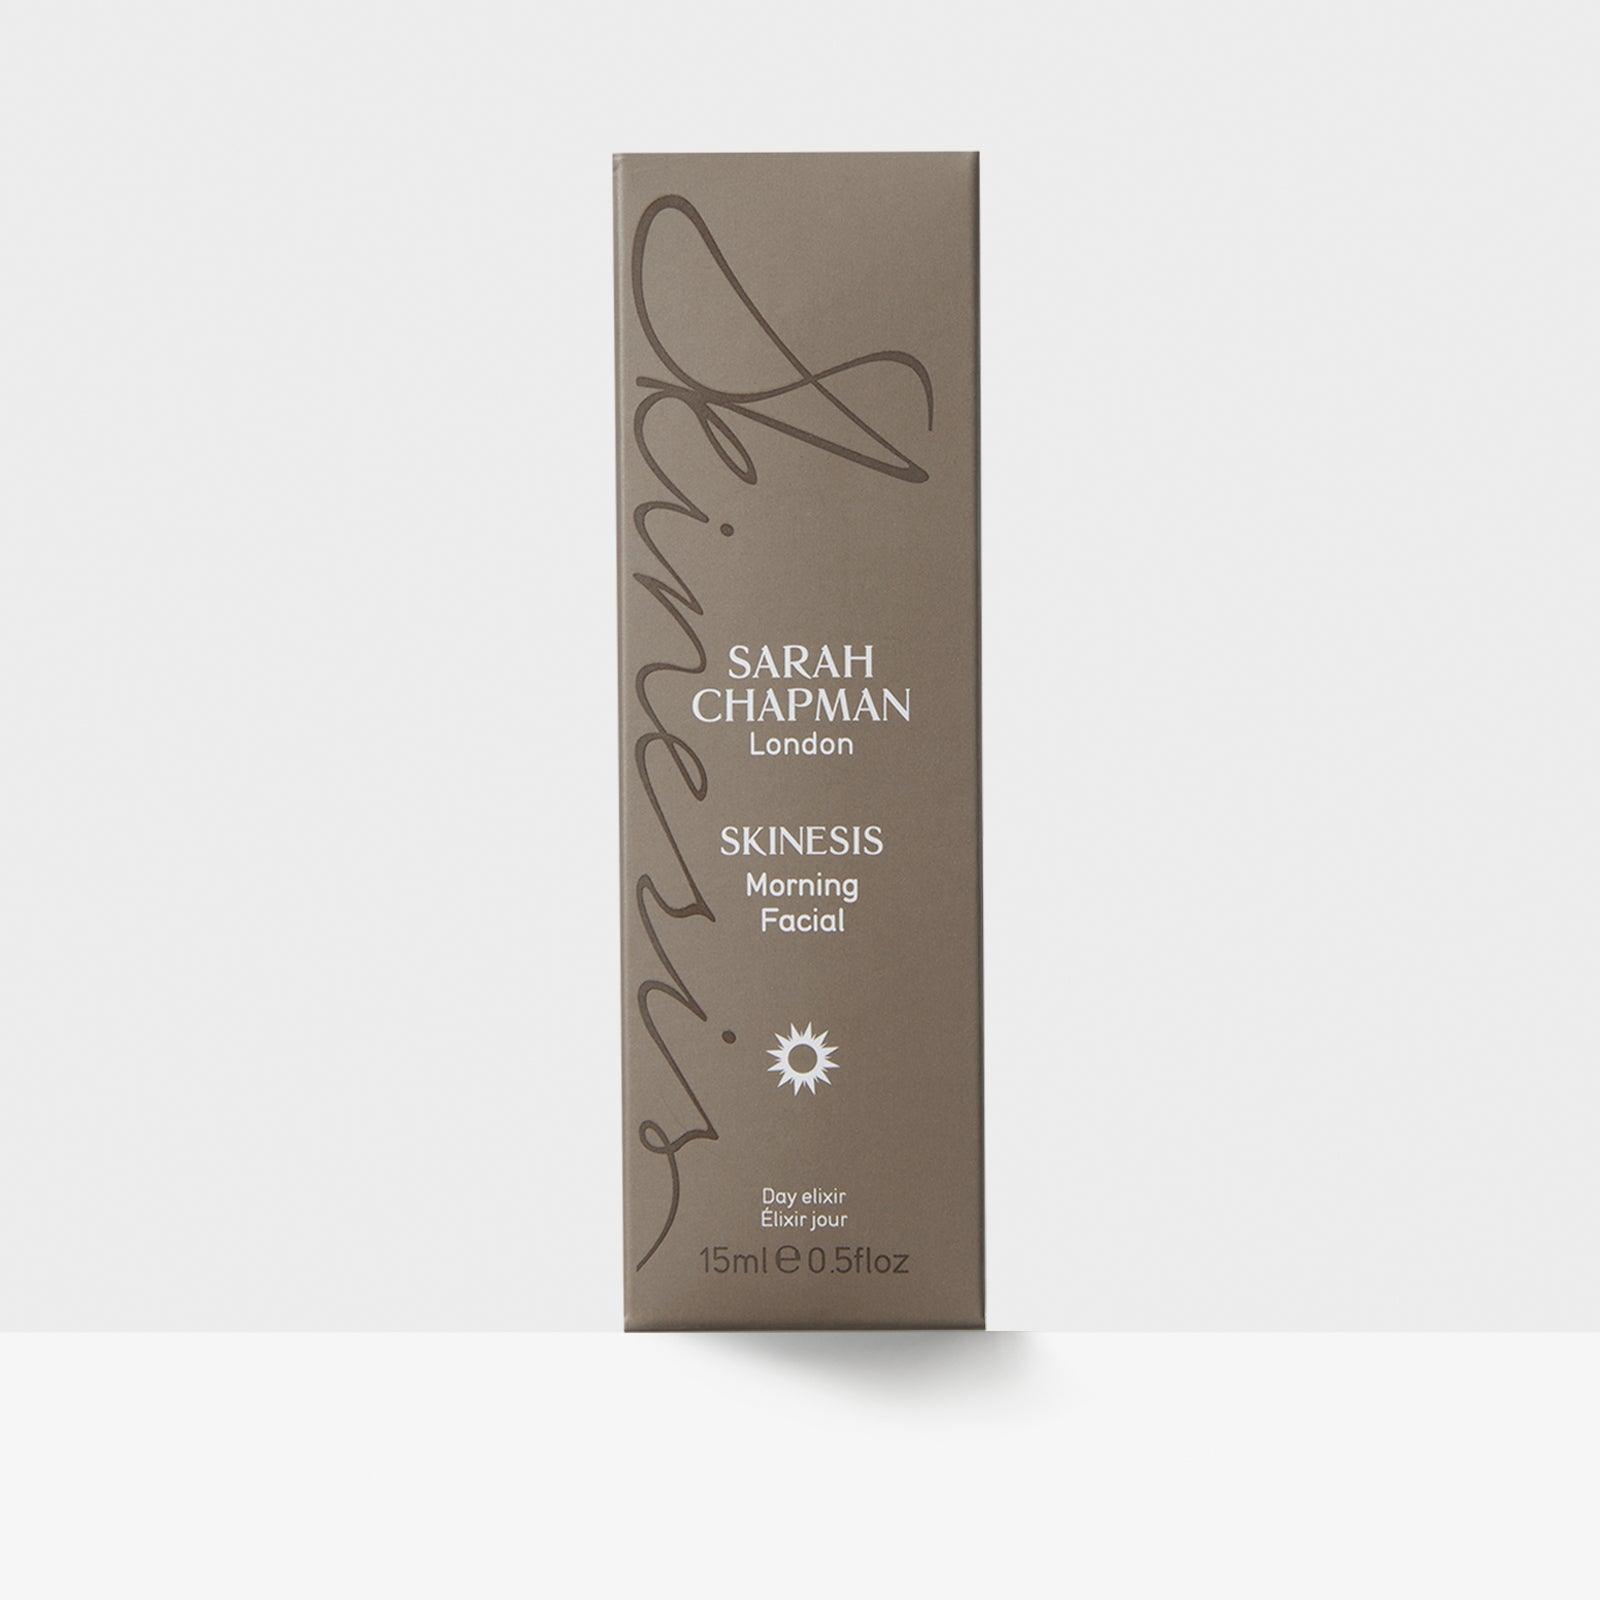 Morning Facial day elixir 15ml Outer Packaging - Sarah Chapman Skinesis